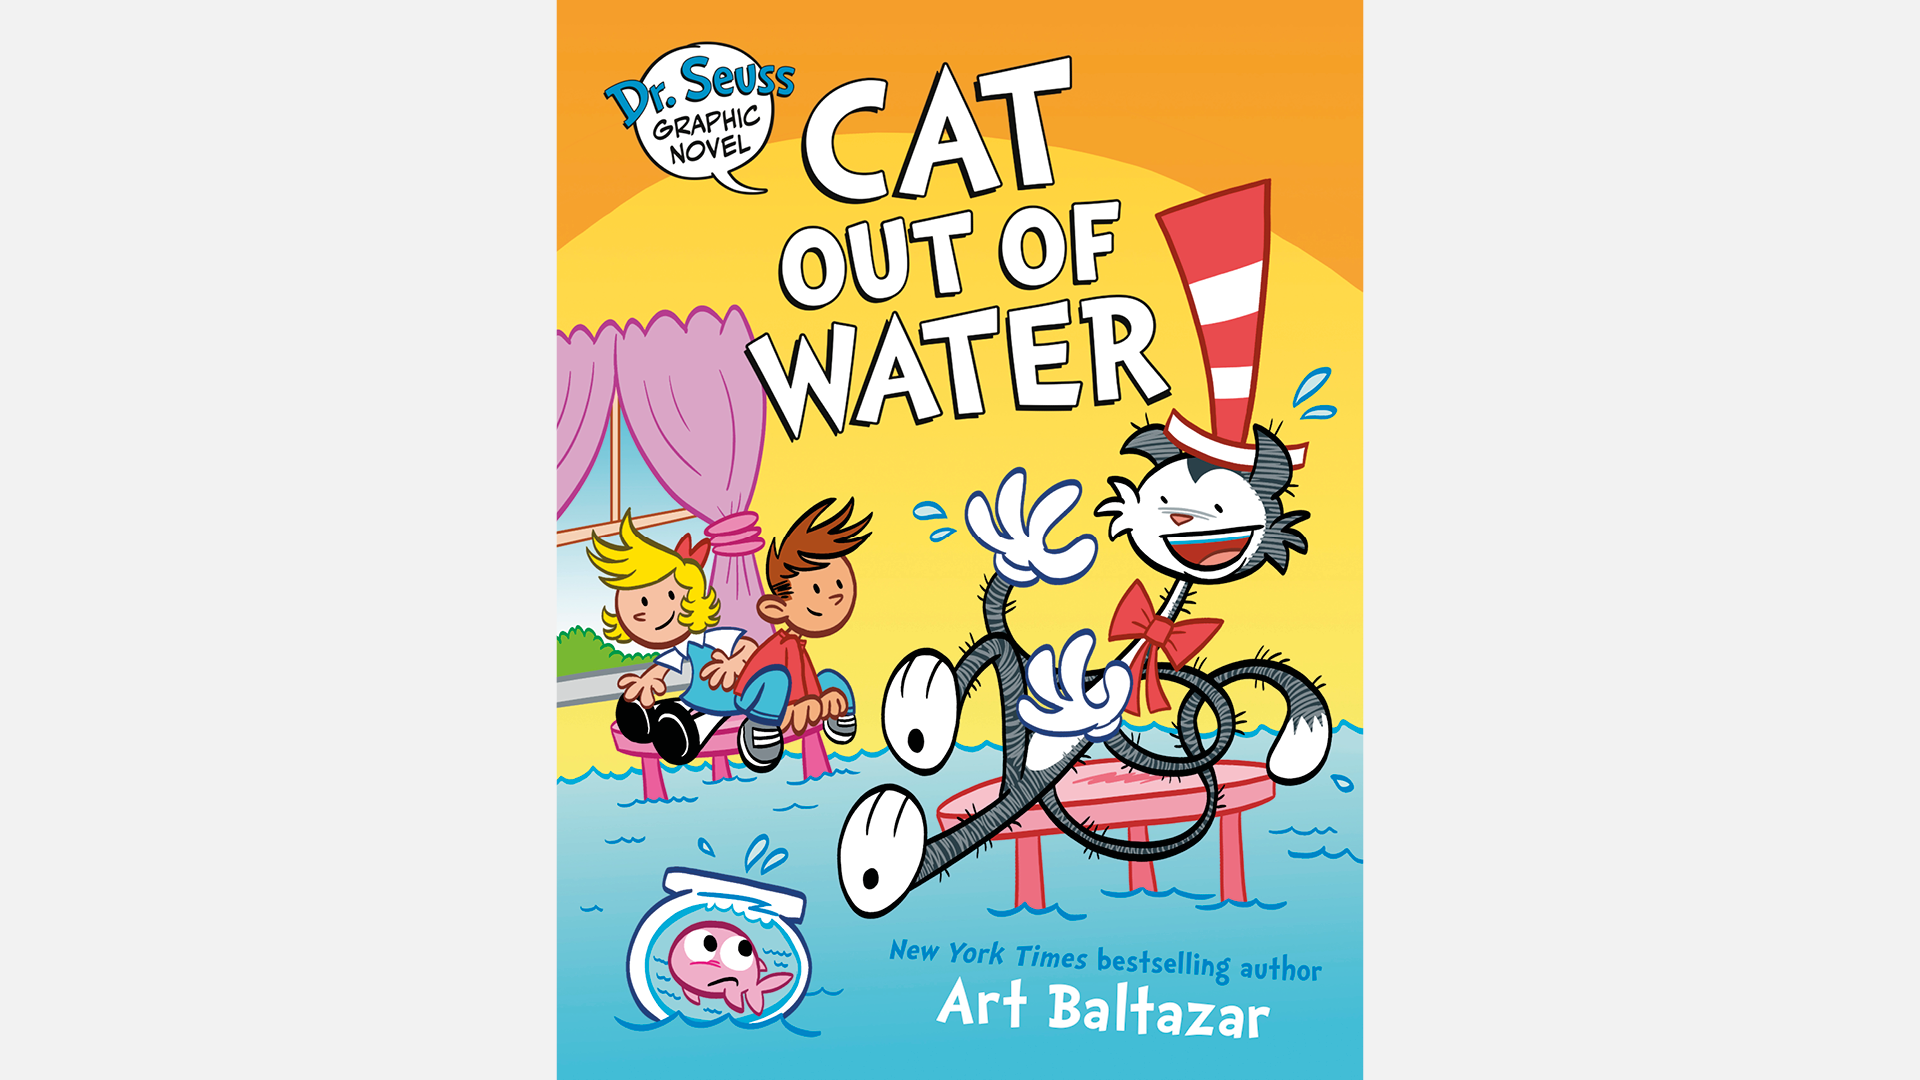 The Cat in the Hat – Author Dr. Seuss – Random House Children's Books